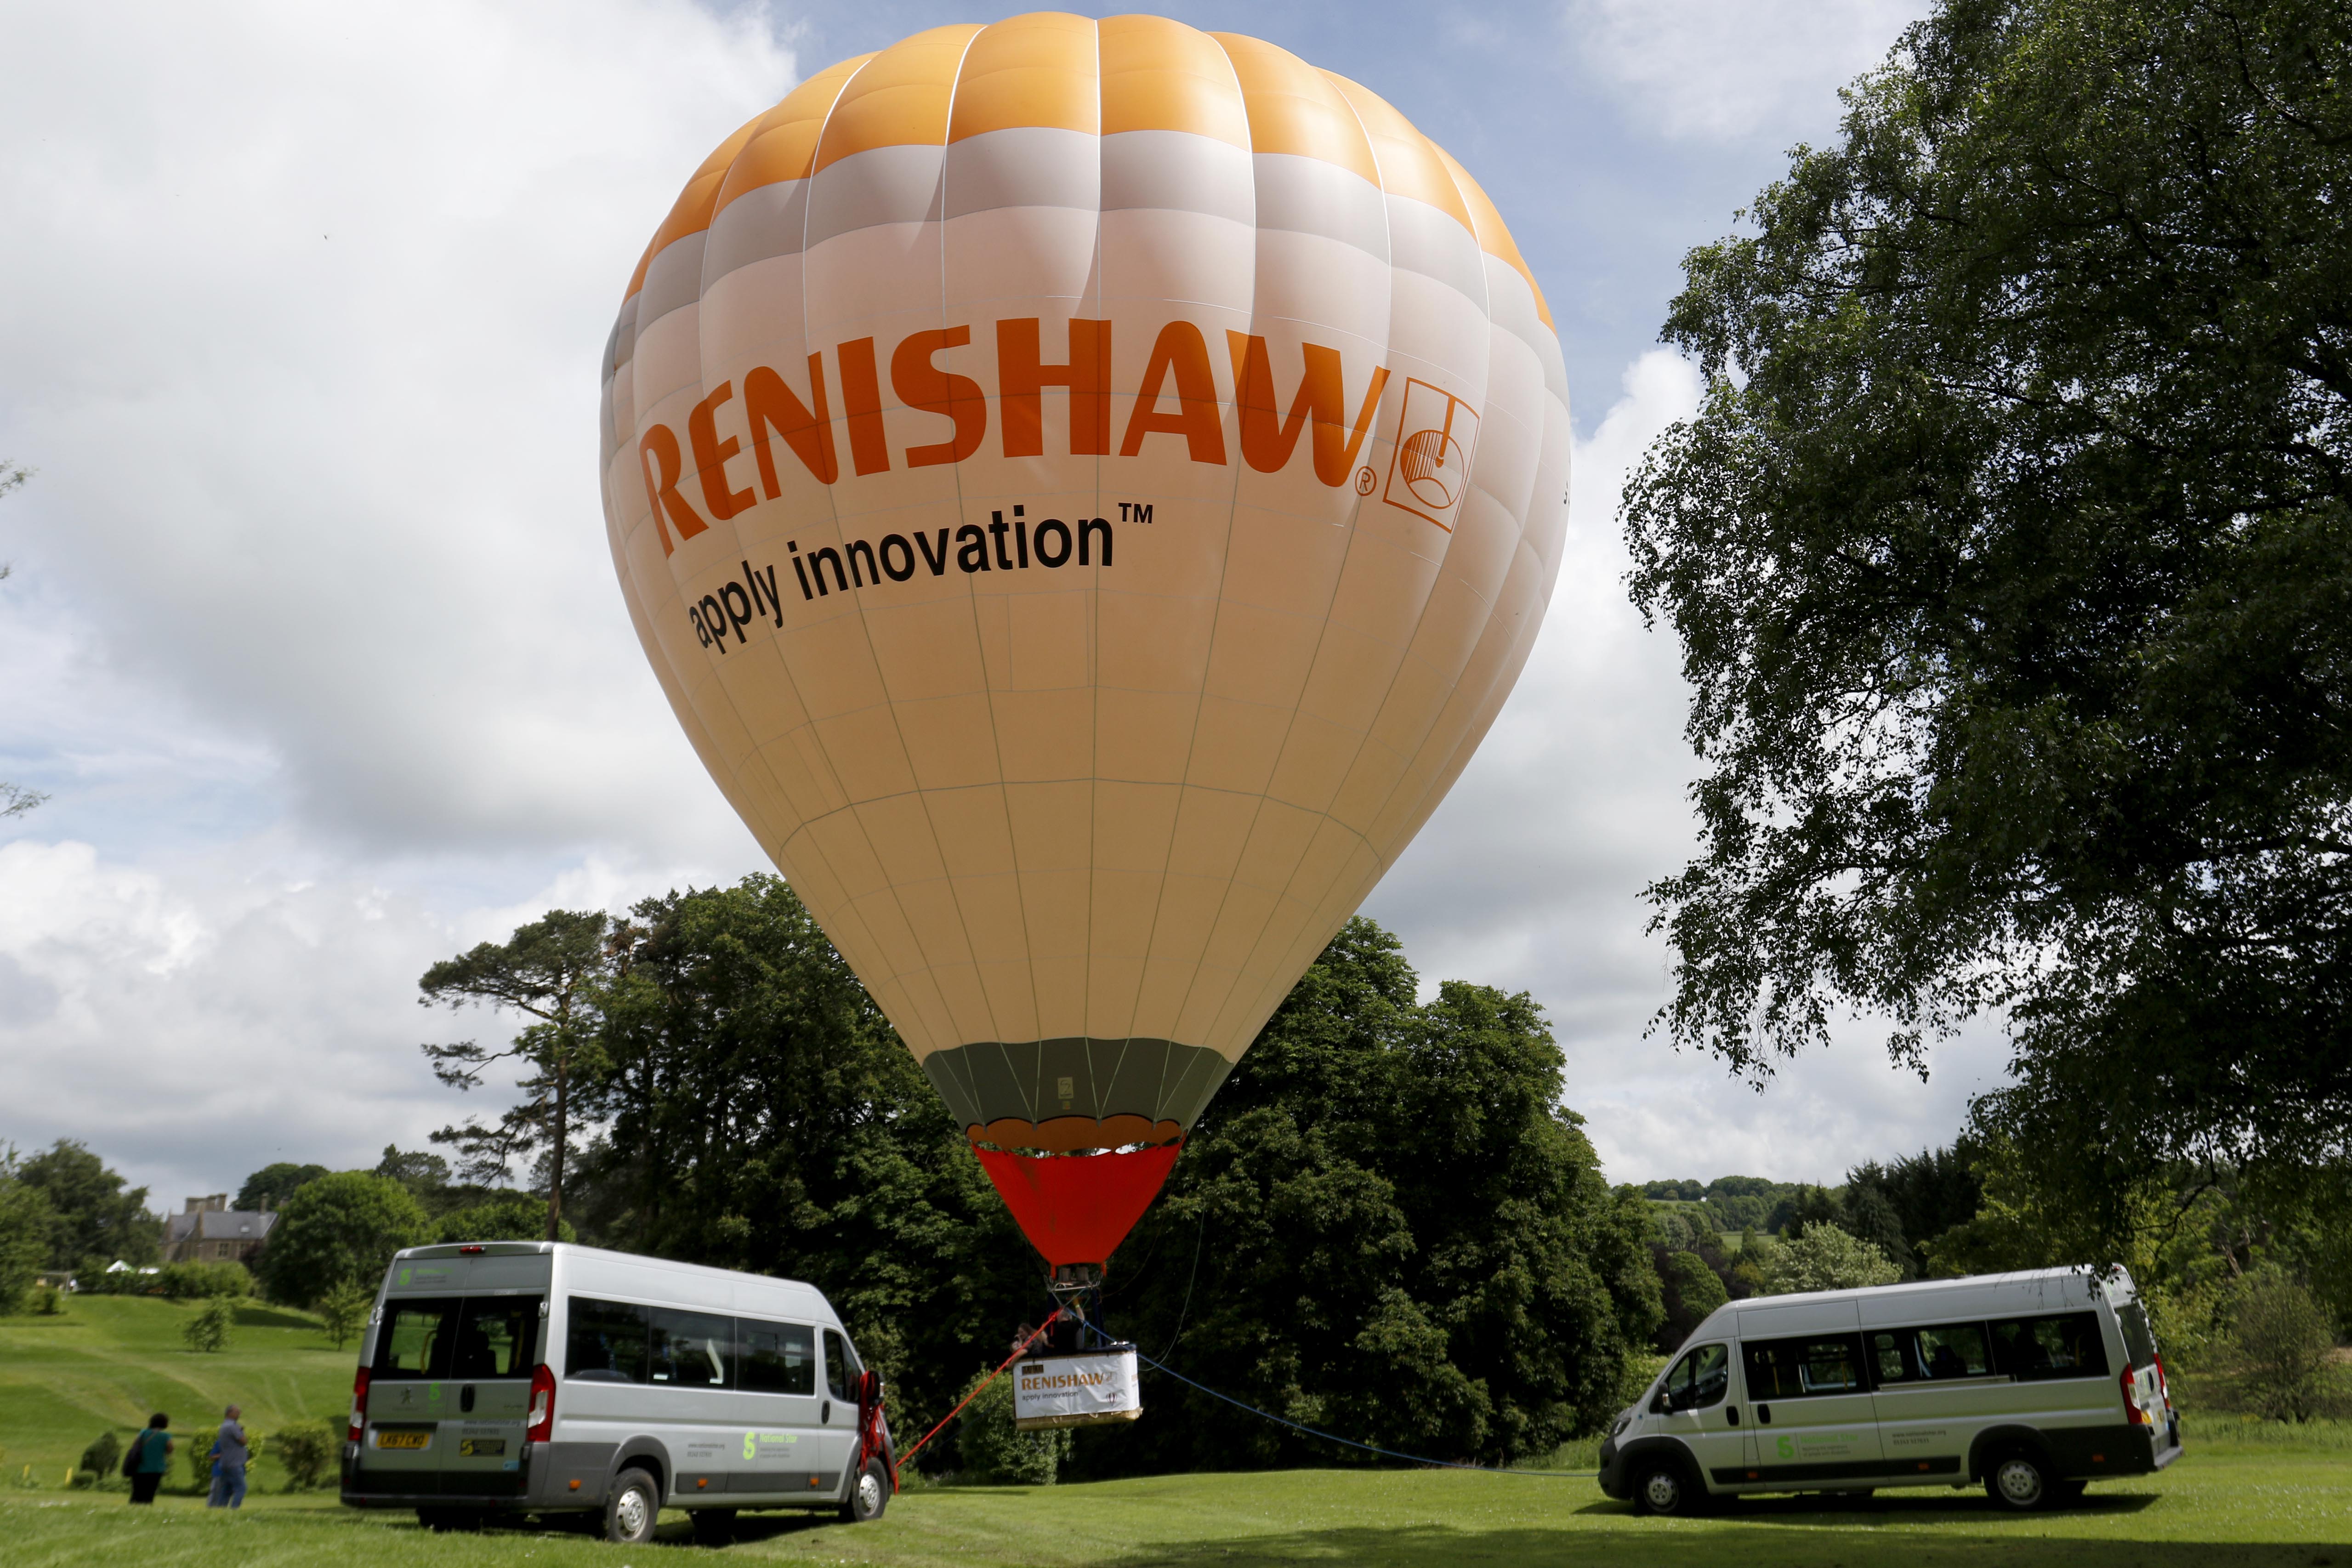 The Renishaw Hot Air Balloon at FestABLE 2018